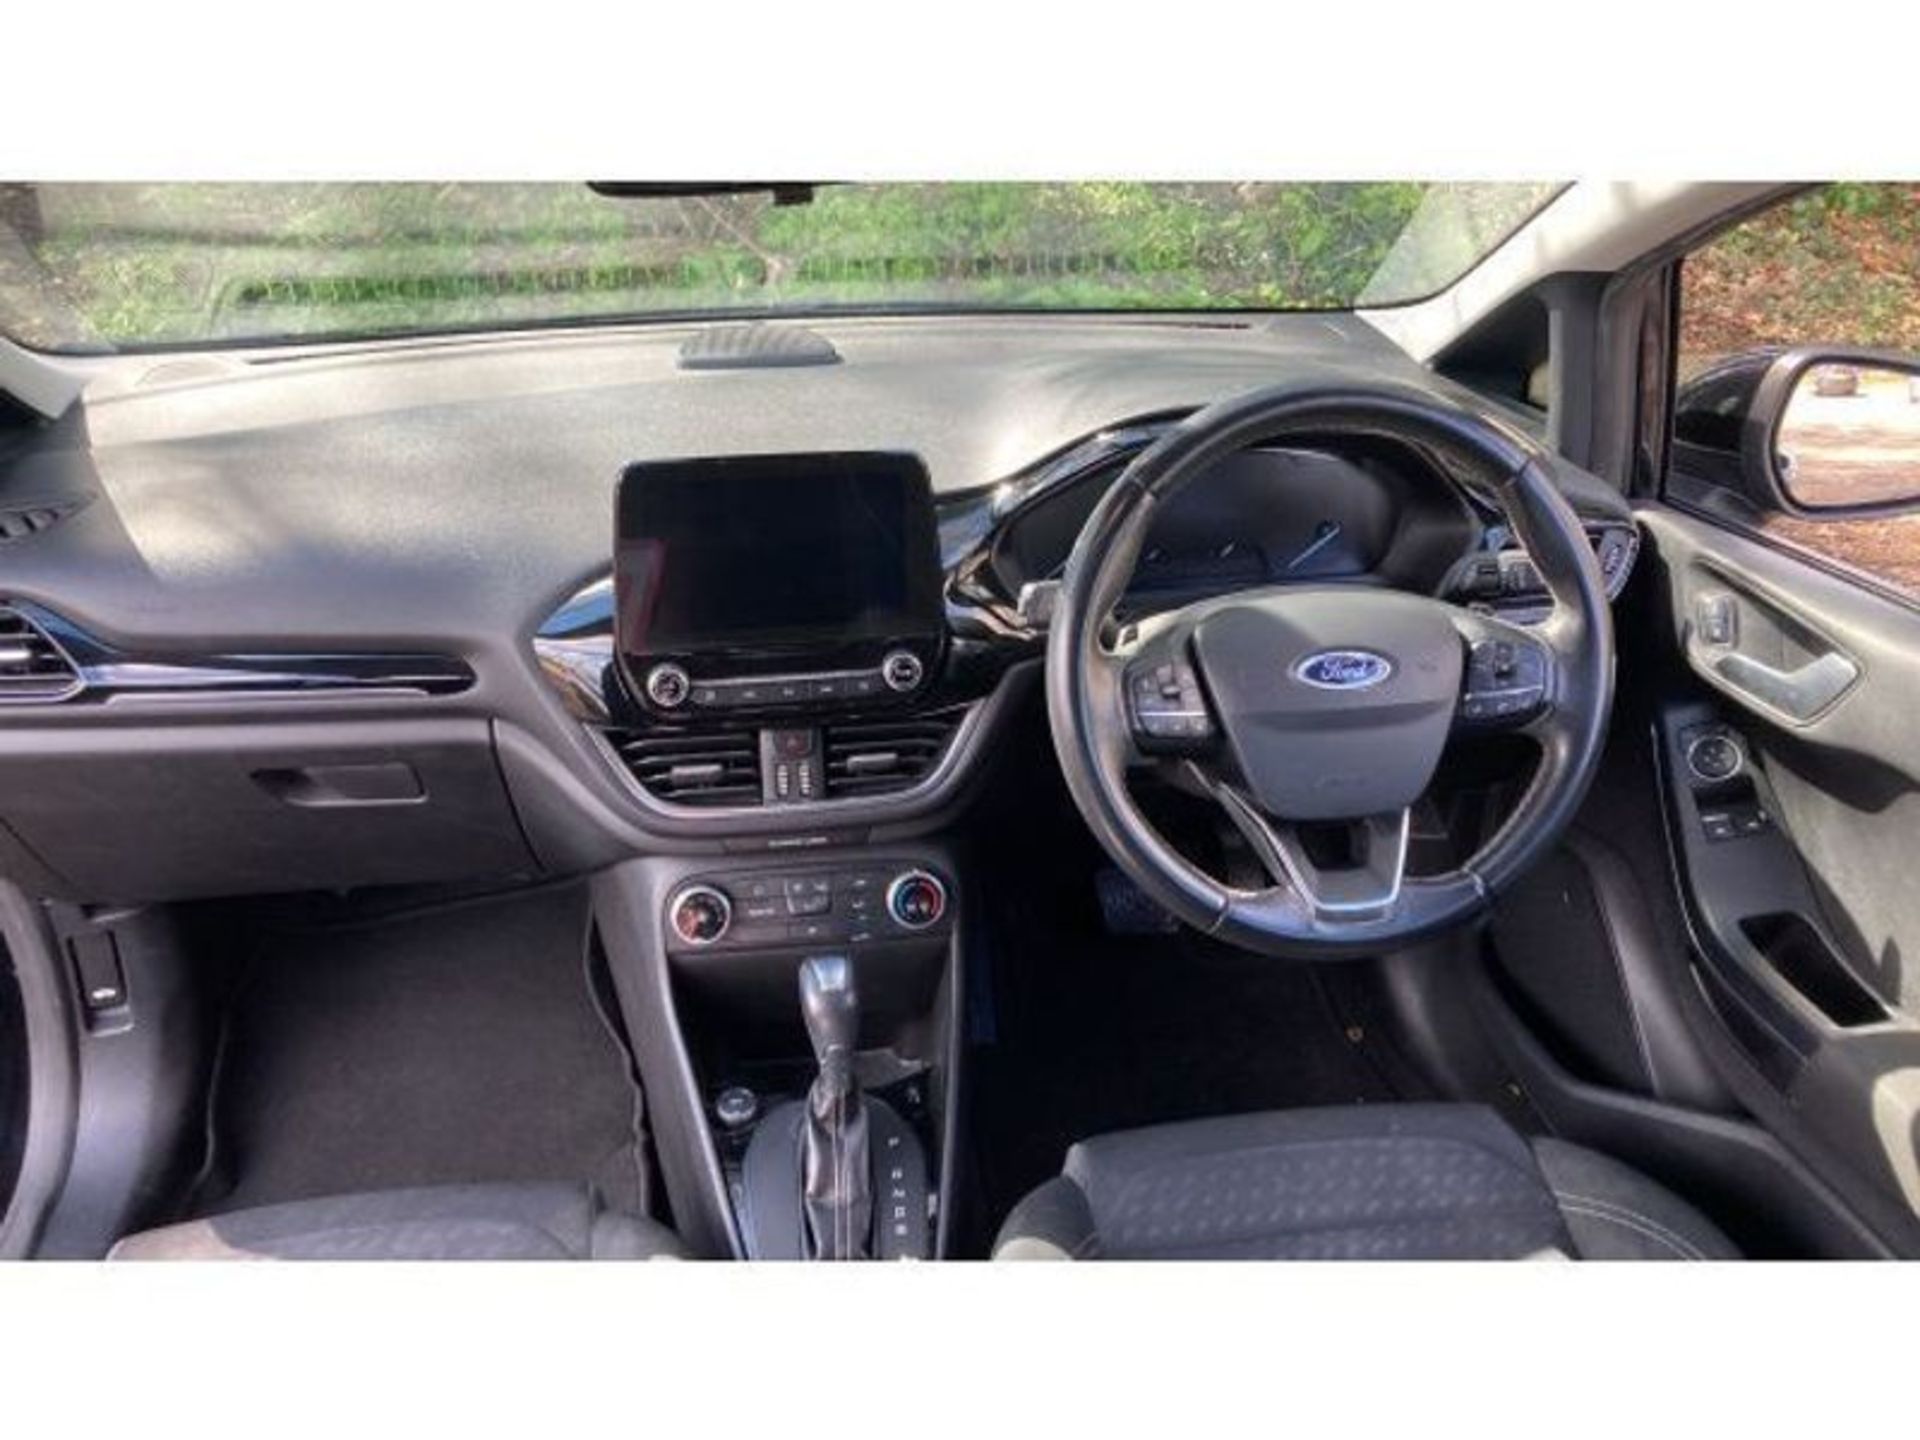 Ford Fiesta 1.0 Zetec 'Automatic Powershift" 5 Door (67 Reg) " New Shape" Black - - Image 8 of 16